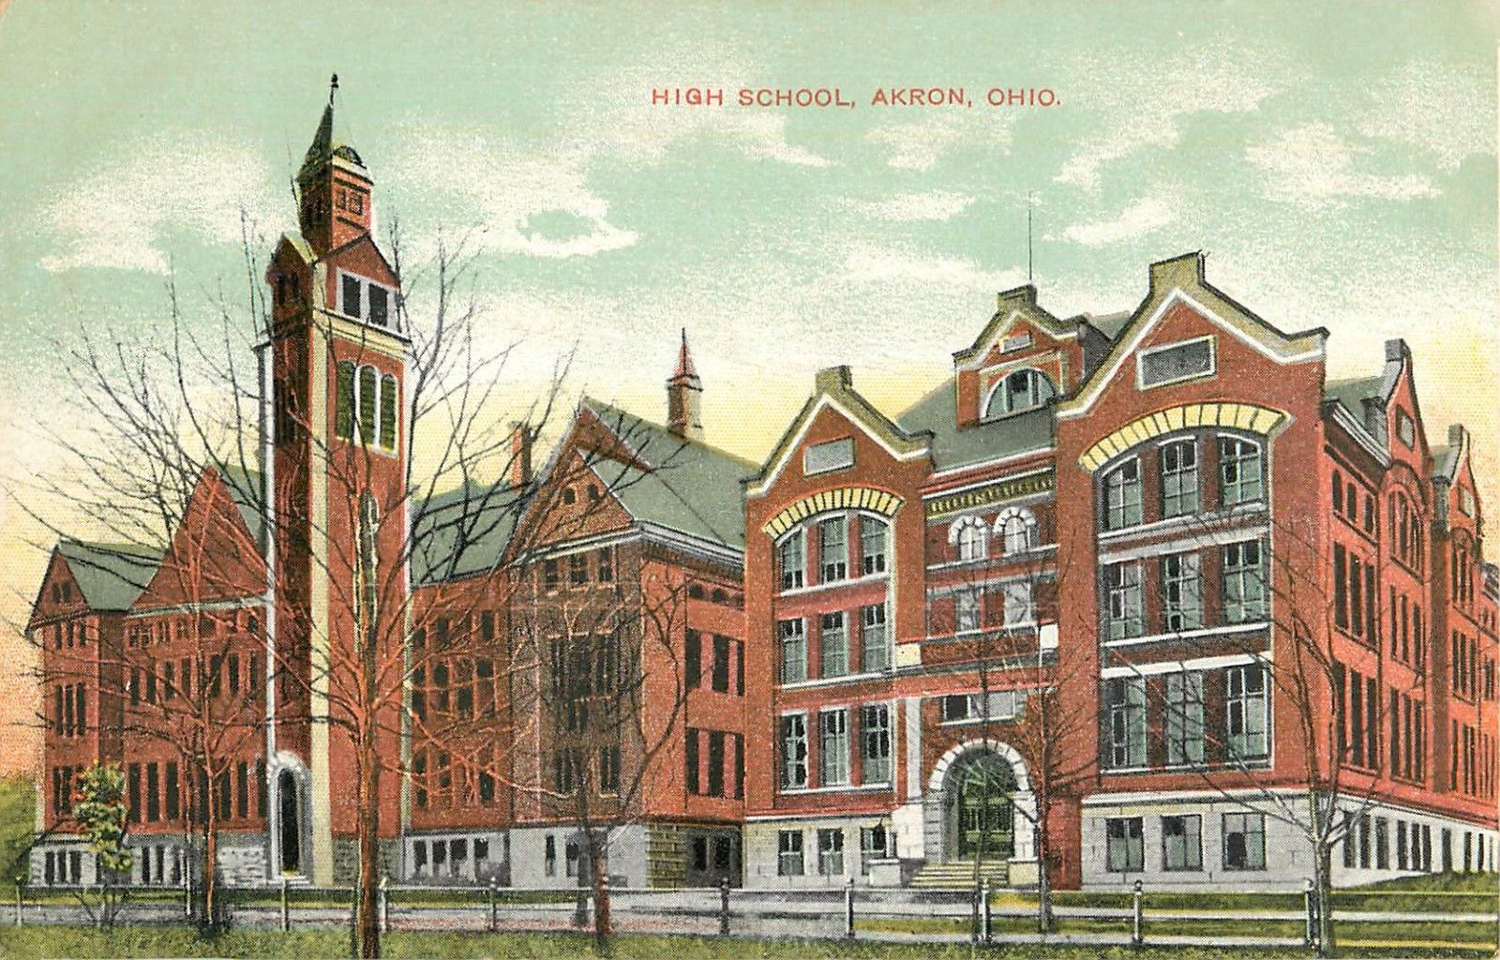 High School, Akron, Ohio. 